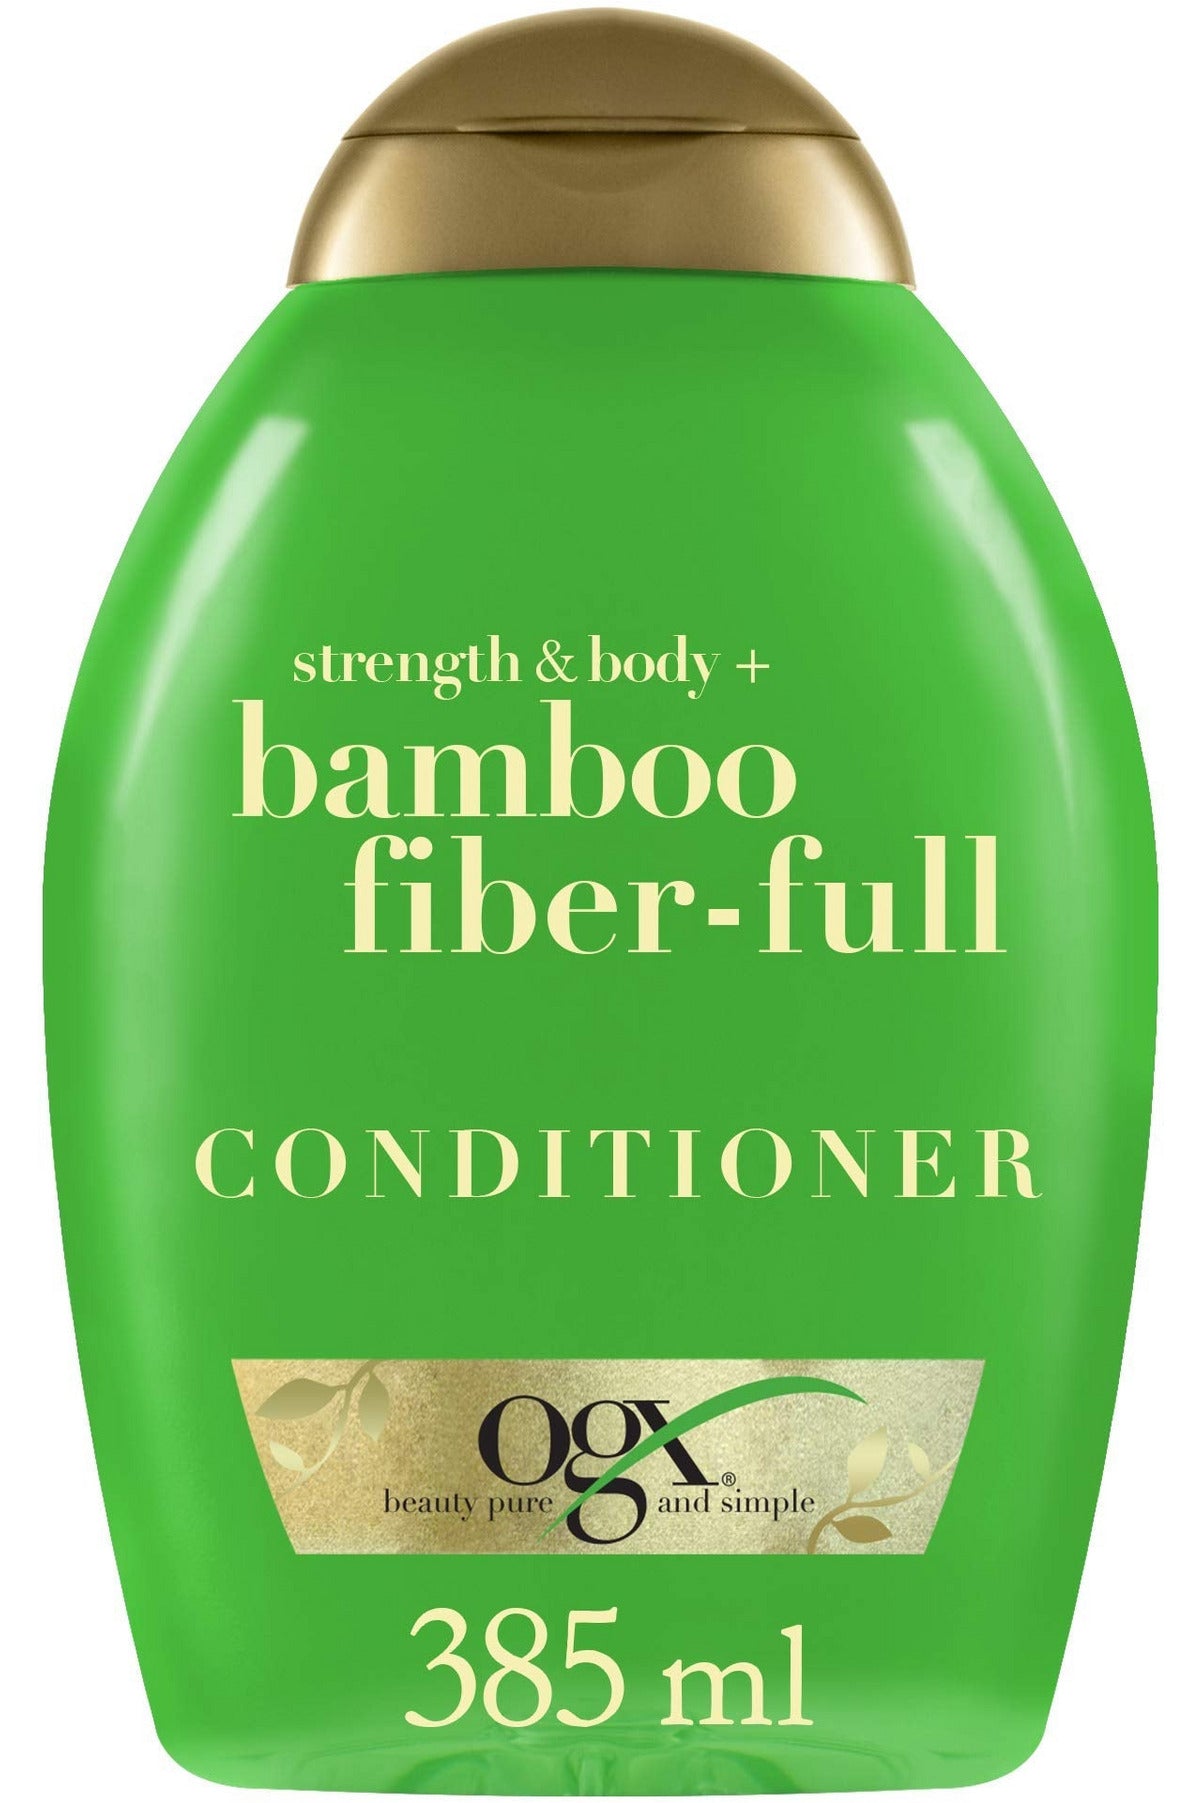 Buy OGX Conditioner Strength & Body Bamboo Fiber Full Conditioner - 130g in Pakistan